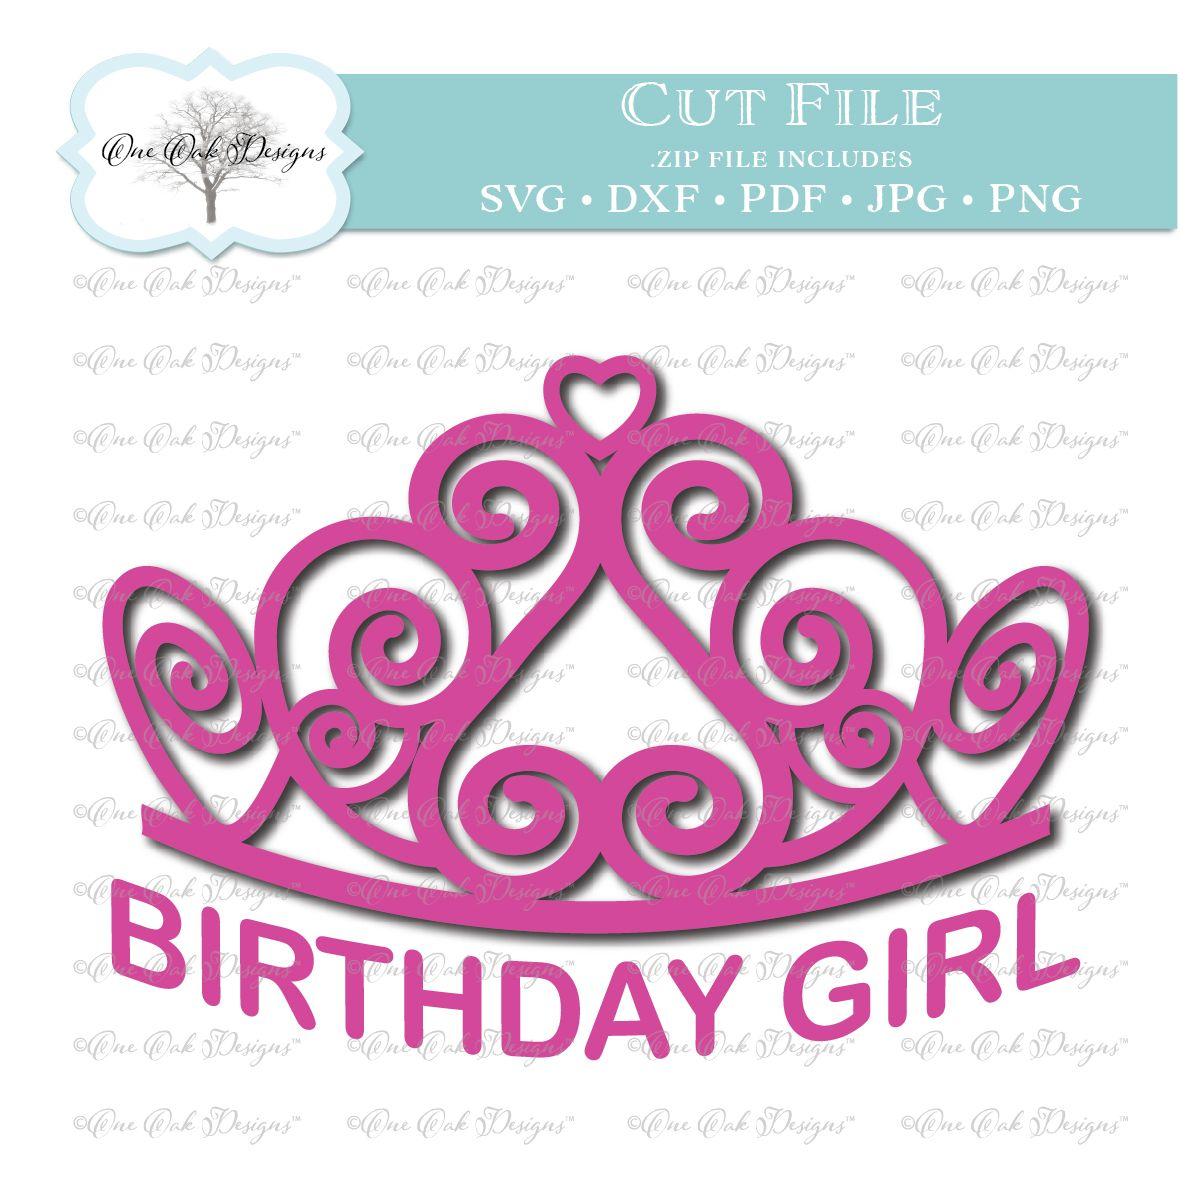 Birthday Girl Logo - Birthday Girl Tiara SVG DXF PNG PDF JPG Cut File